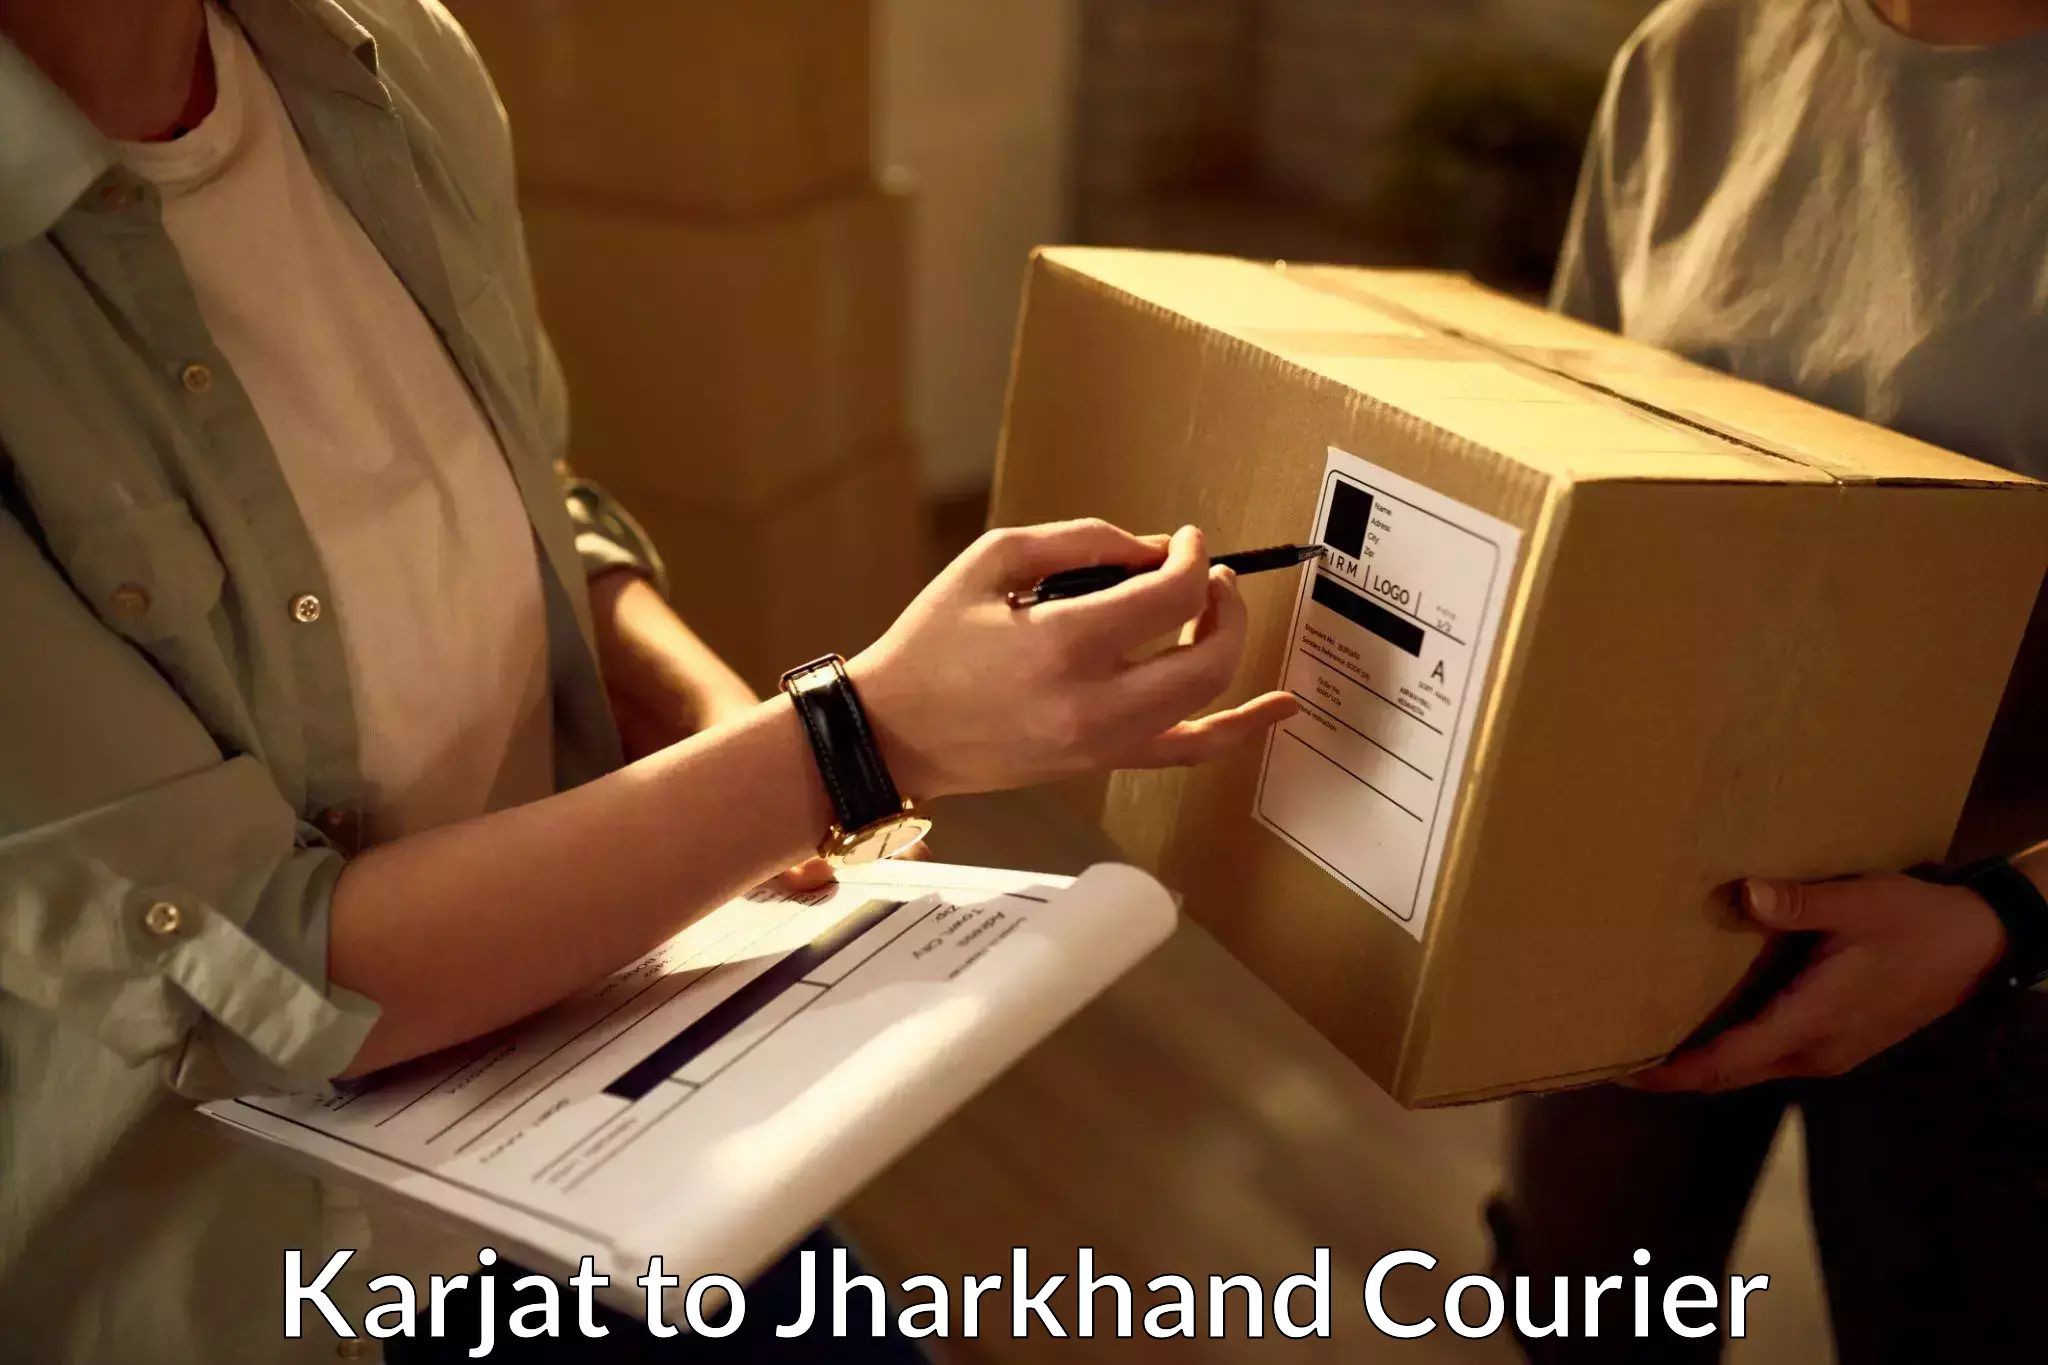 Wholesale parcel delivery in Karjat to Medininagar